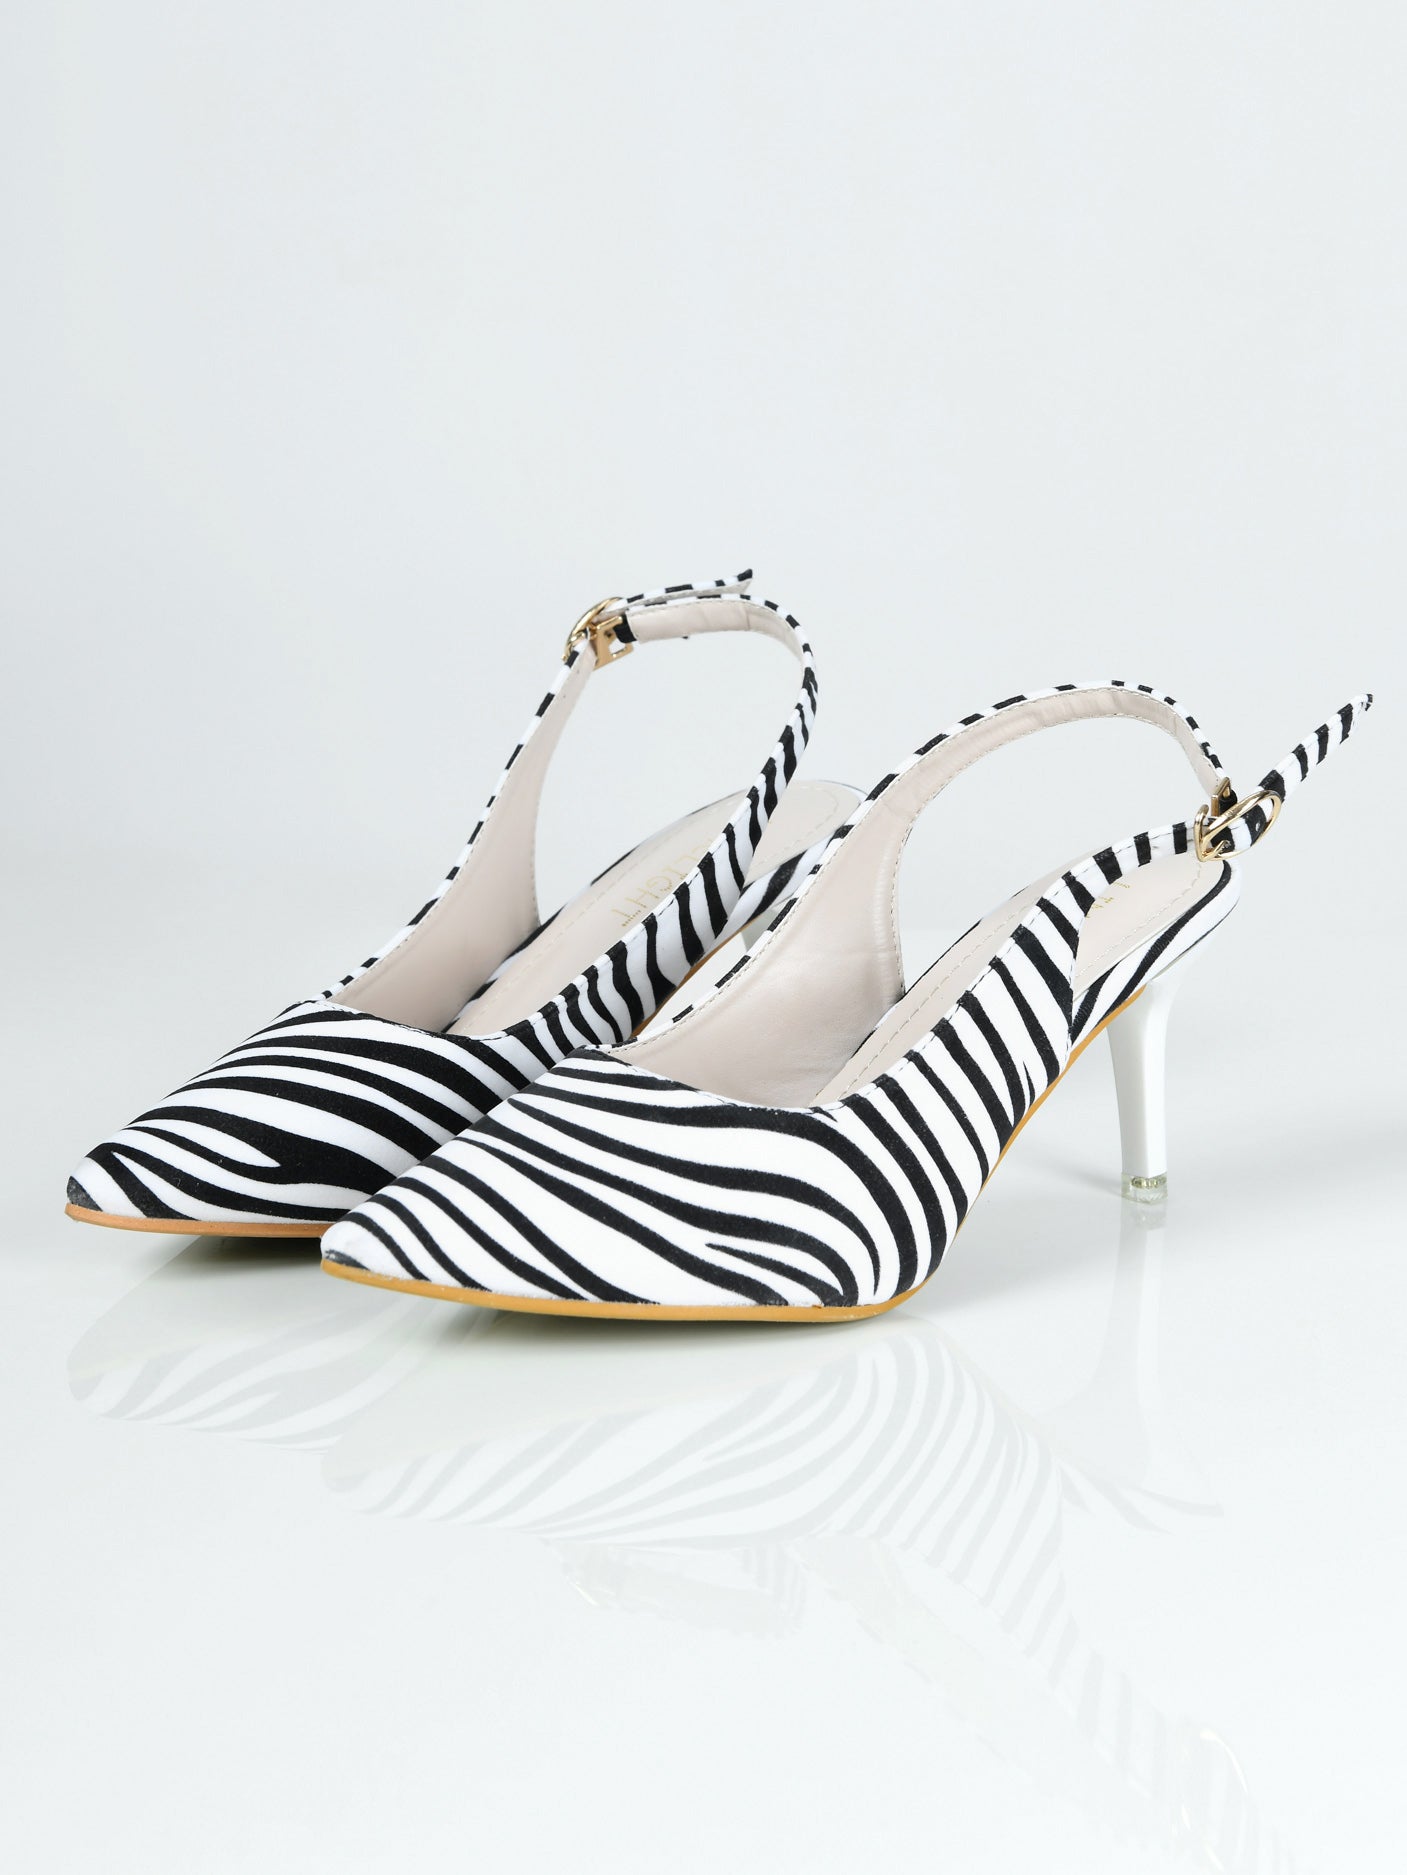 Zebra Print Heels - Black and White